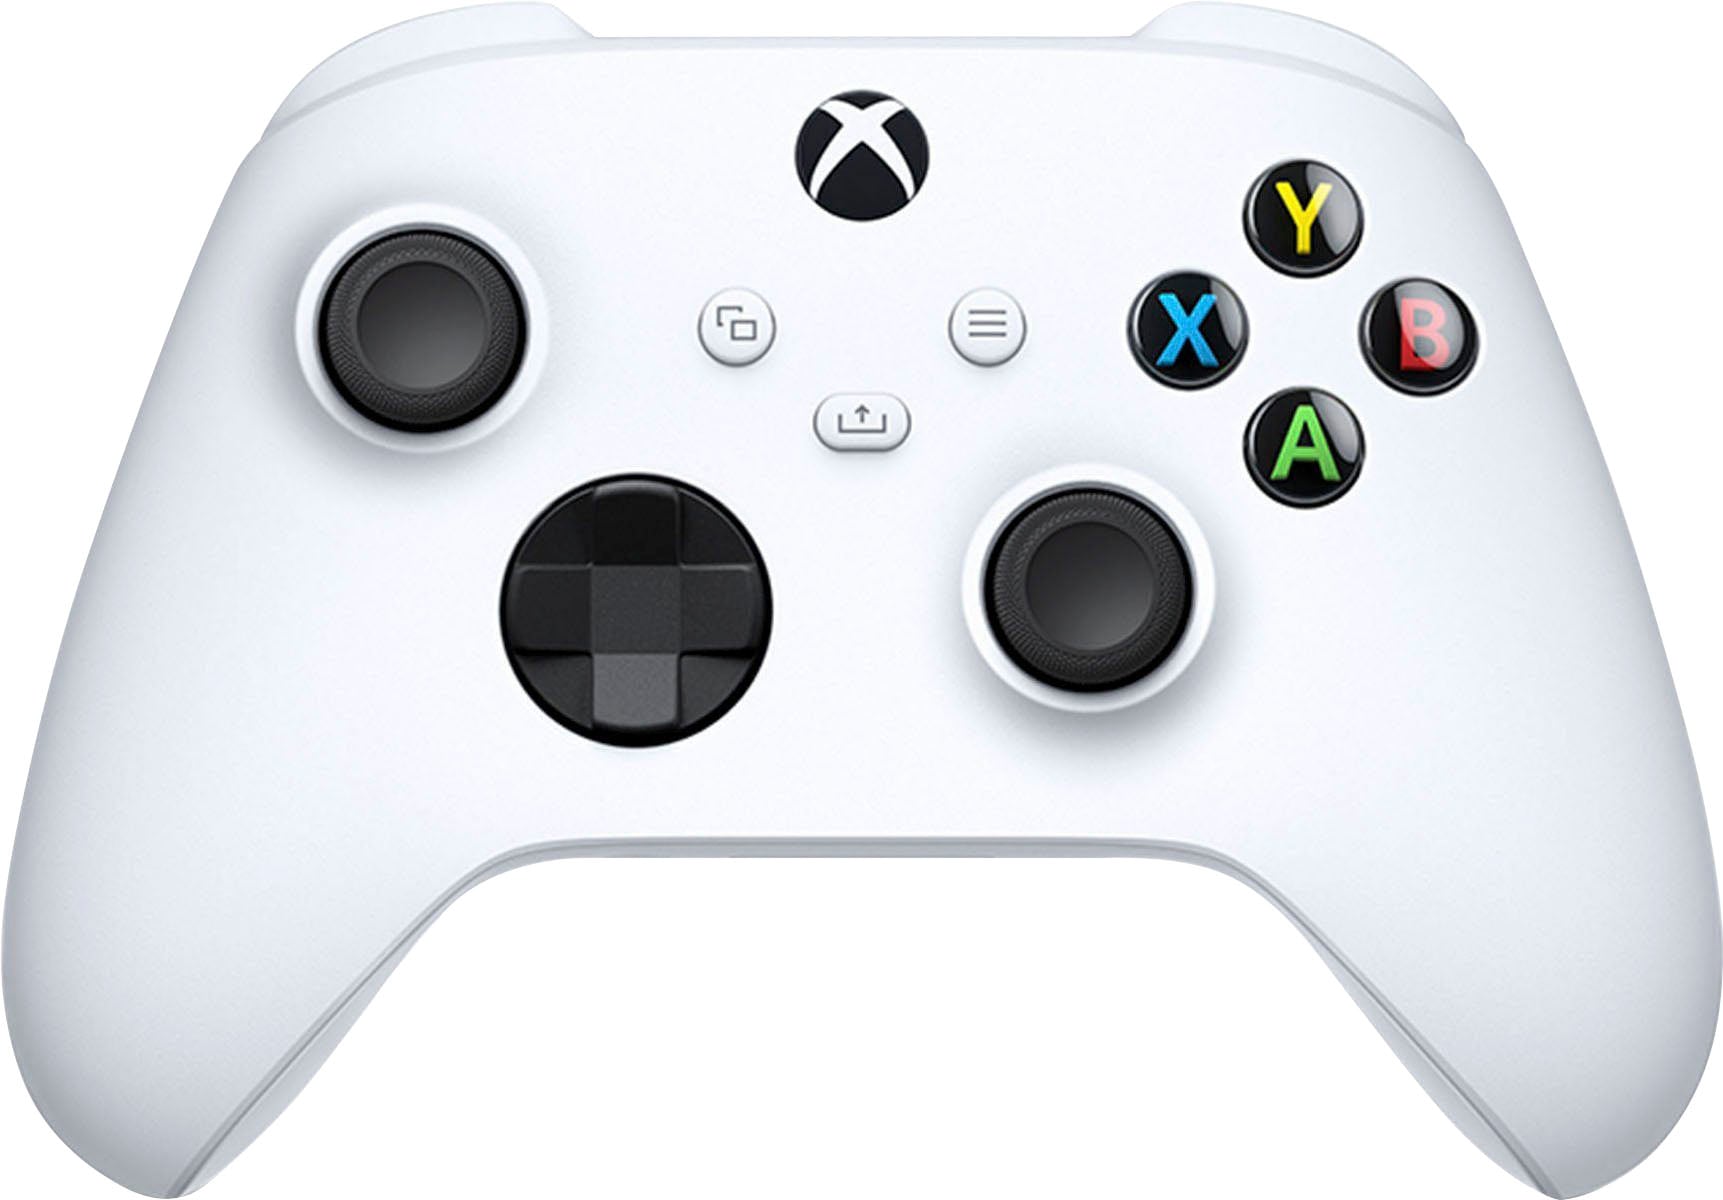 Xbox Konsolen-Set »Series S inkl. Diablo IV (Code)«